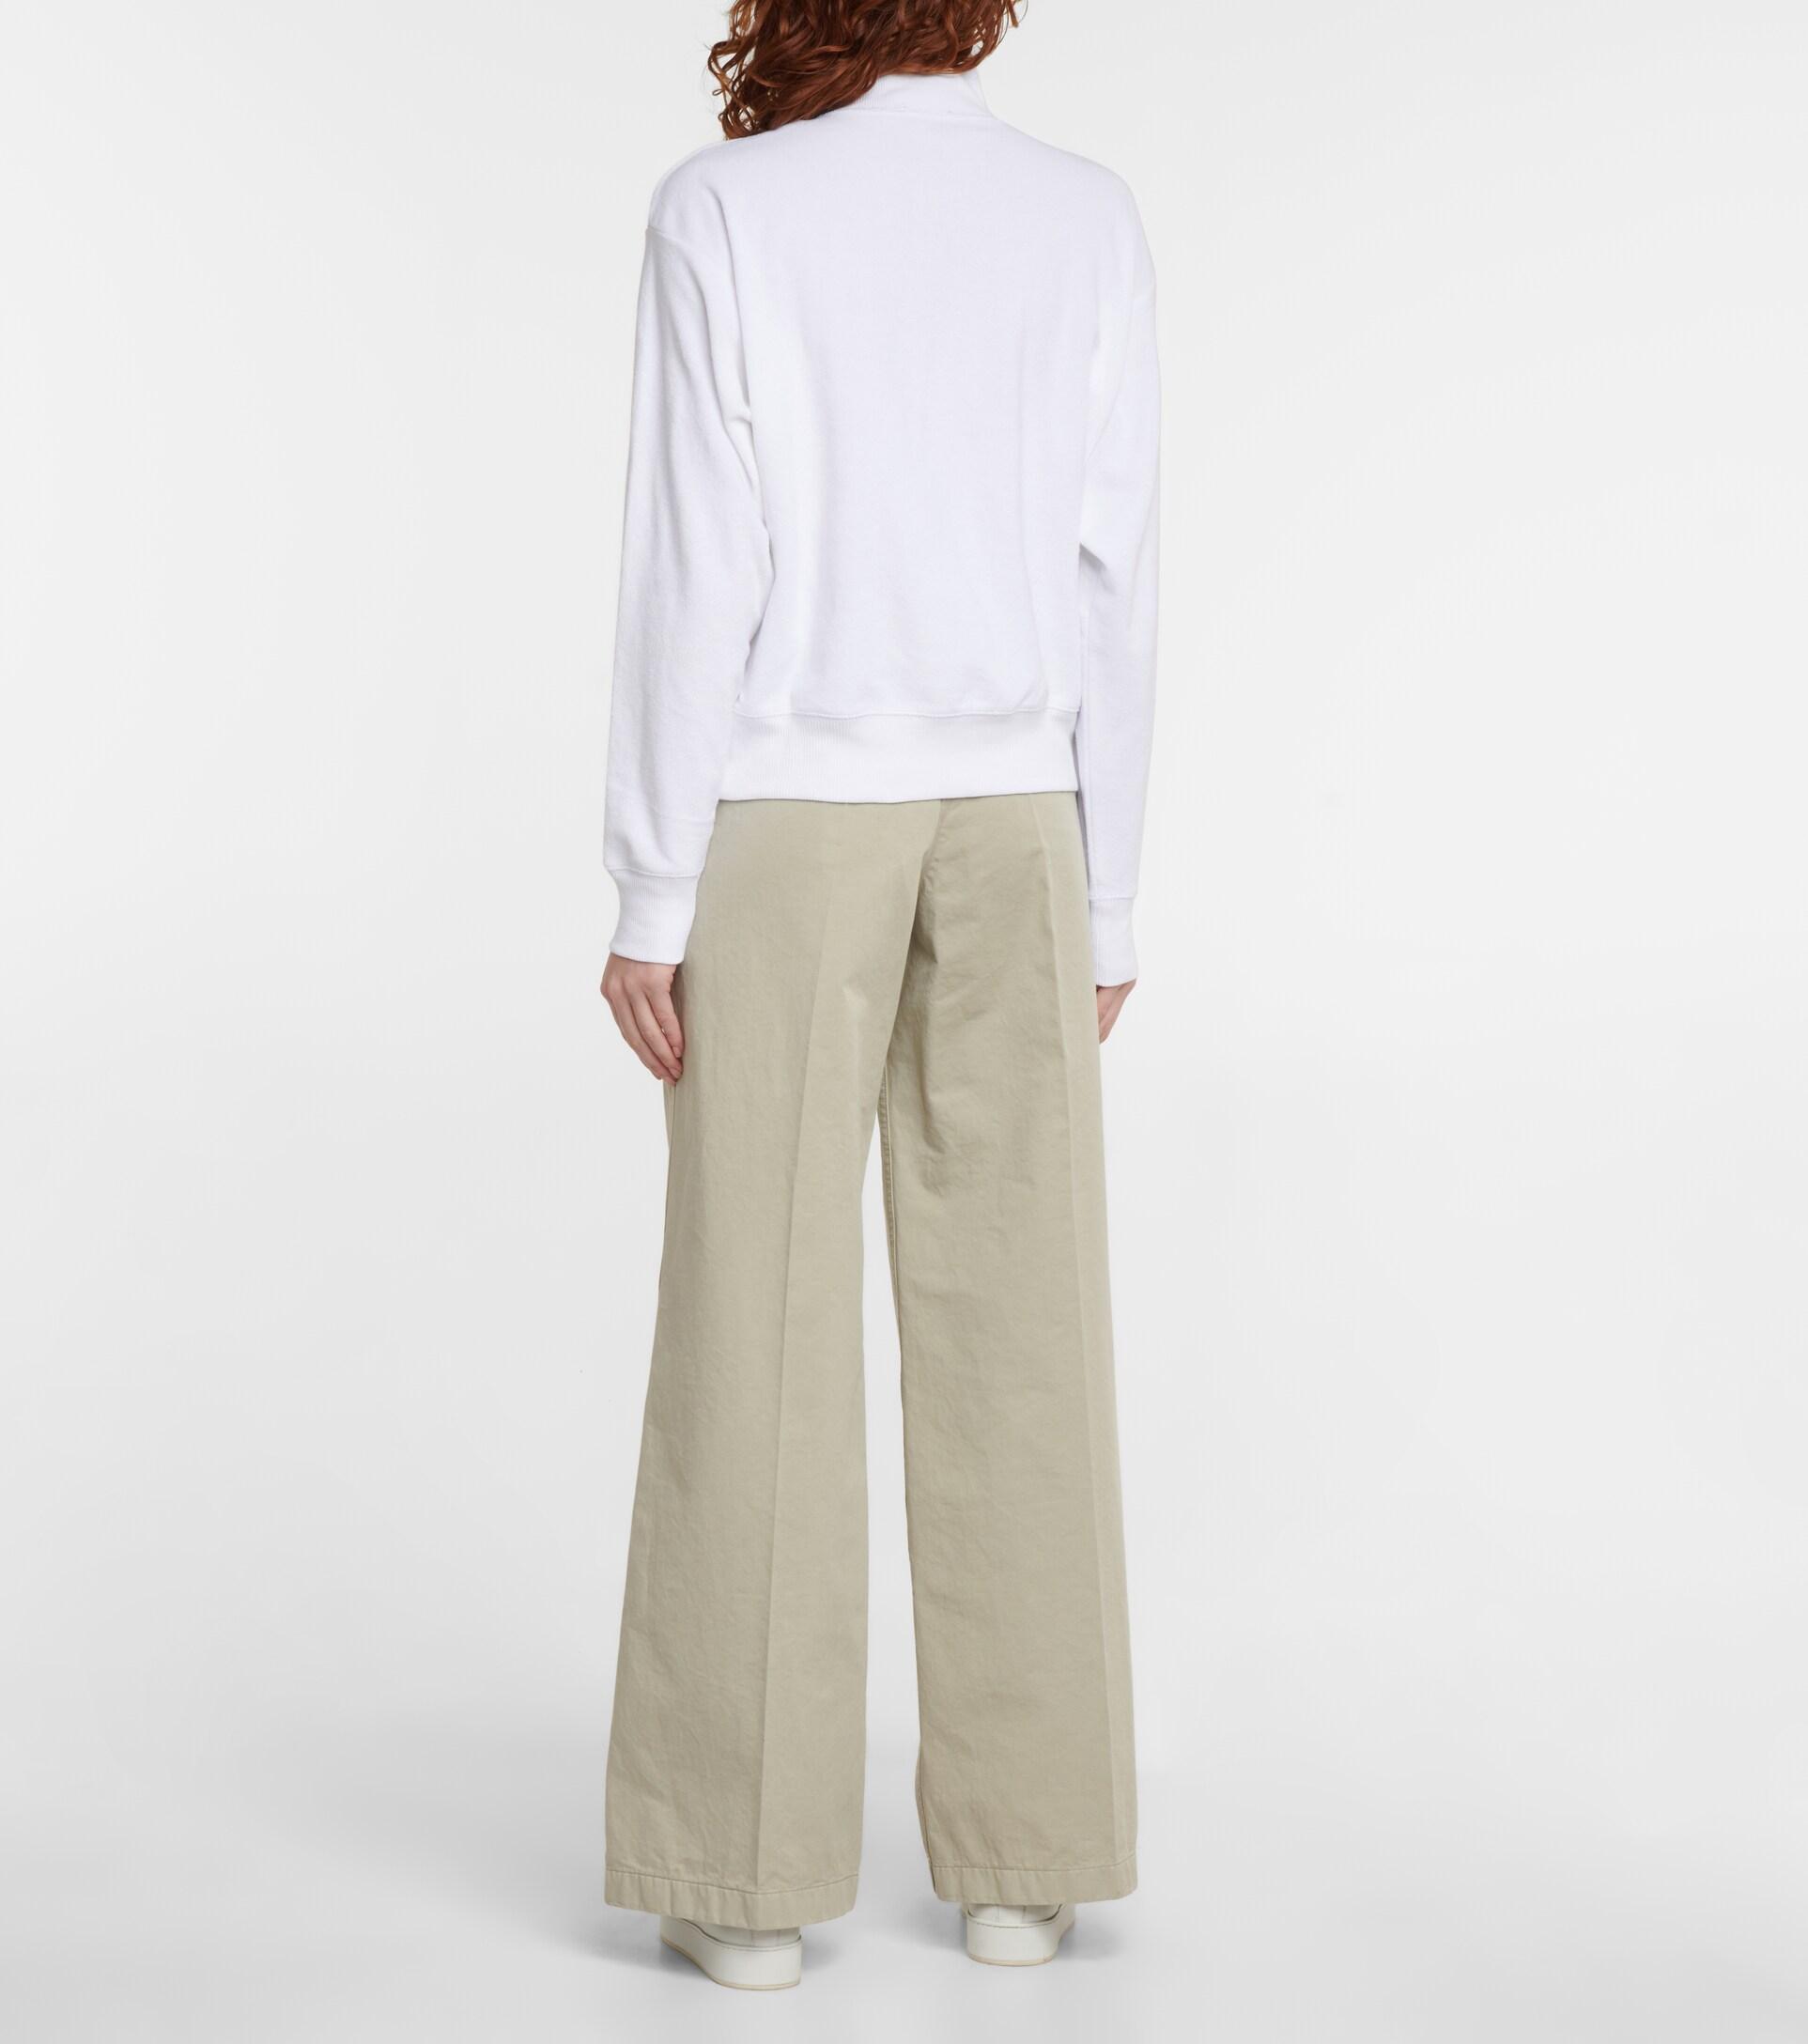 Polo Ralph Lauren Cotton Terry Sweatshirt in White | Lyst